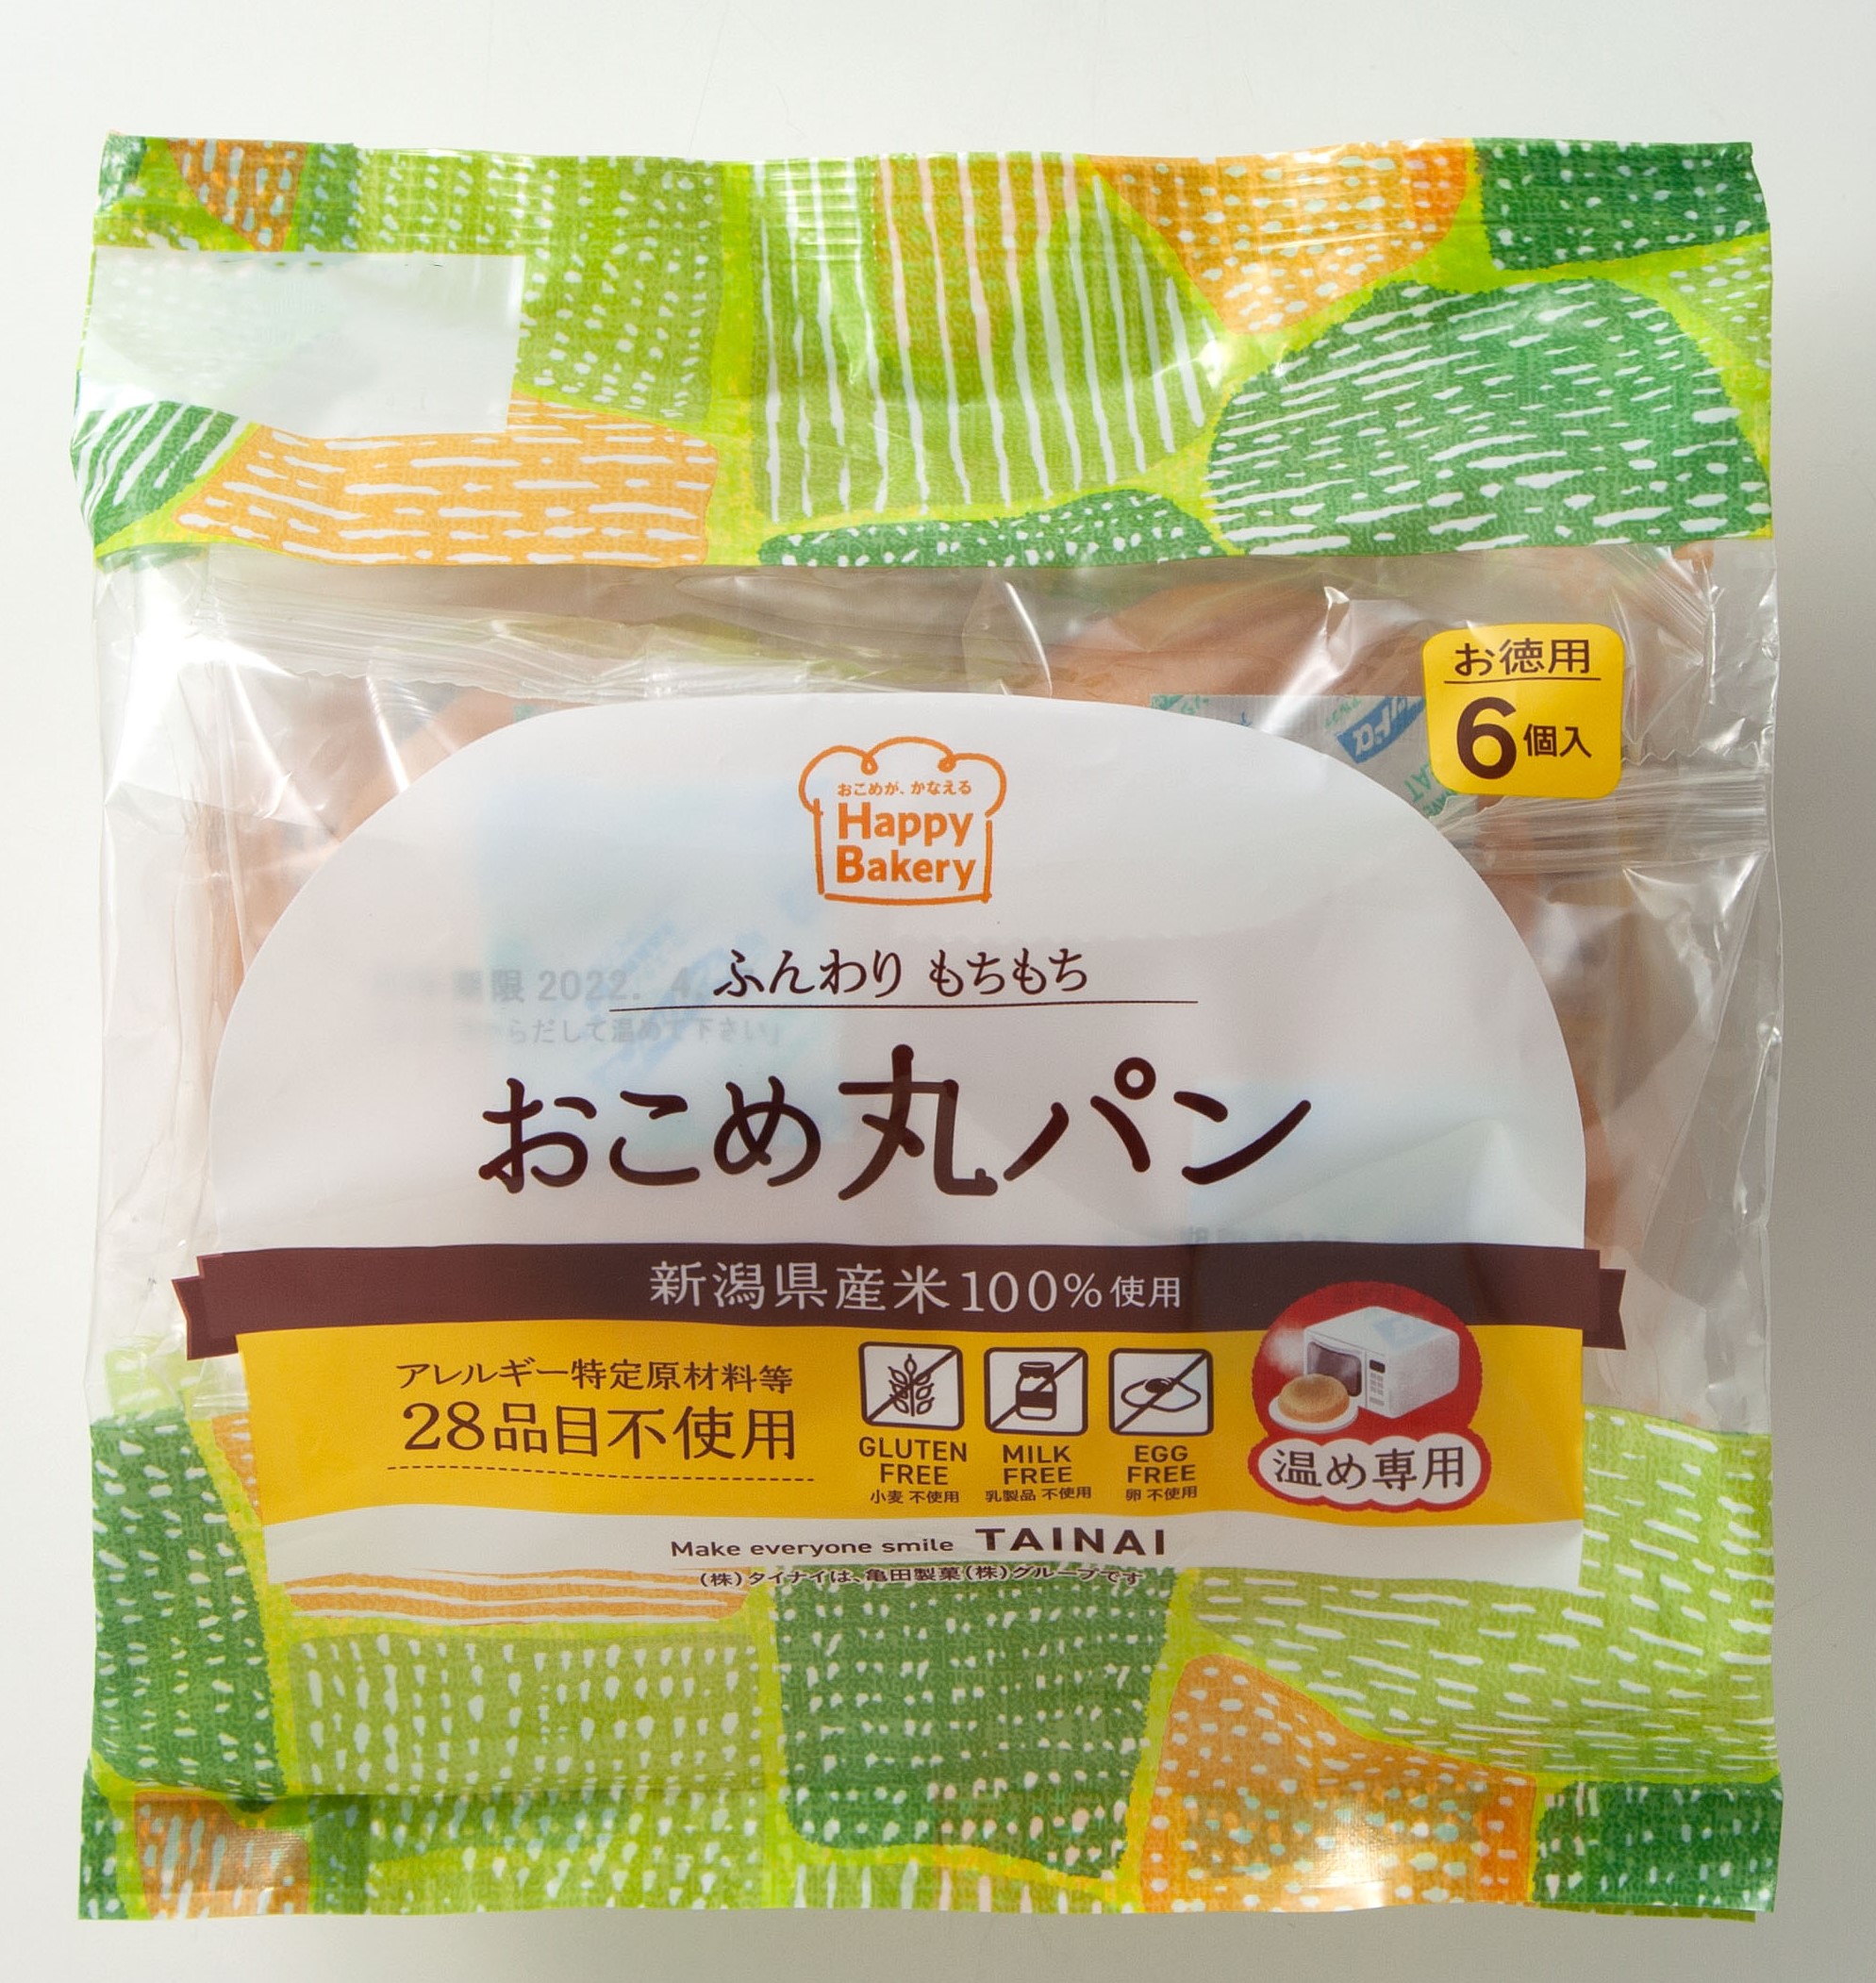 NEW product / Brand : Rice bread(Tainai Co., Ltd.)のイメージ